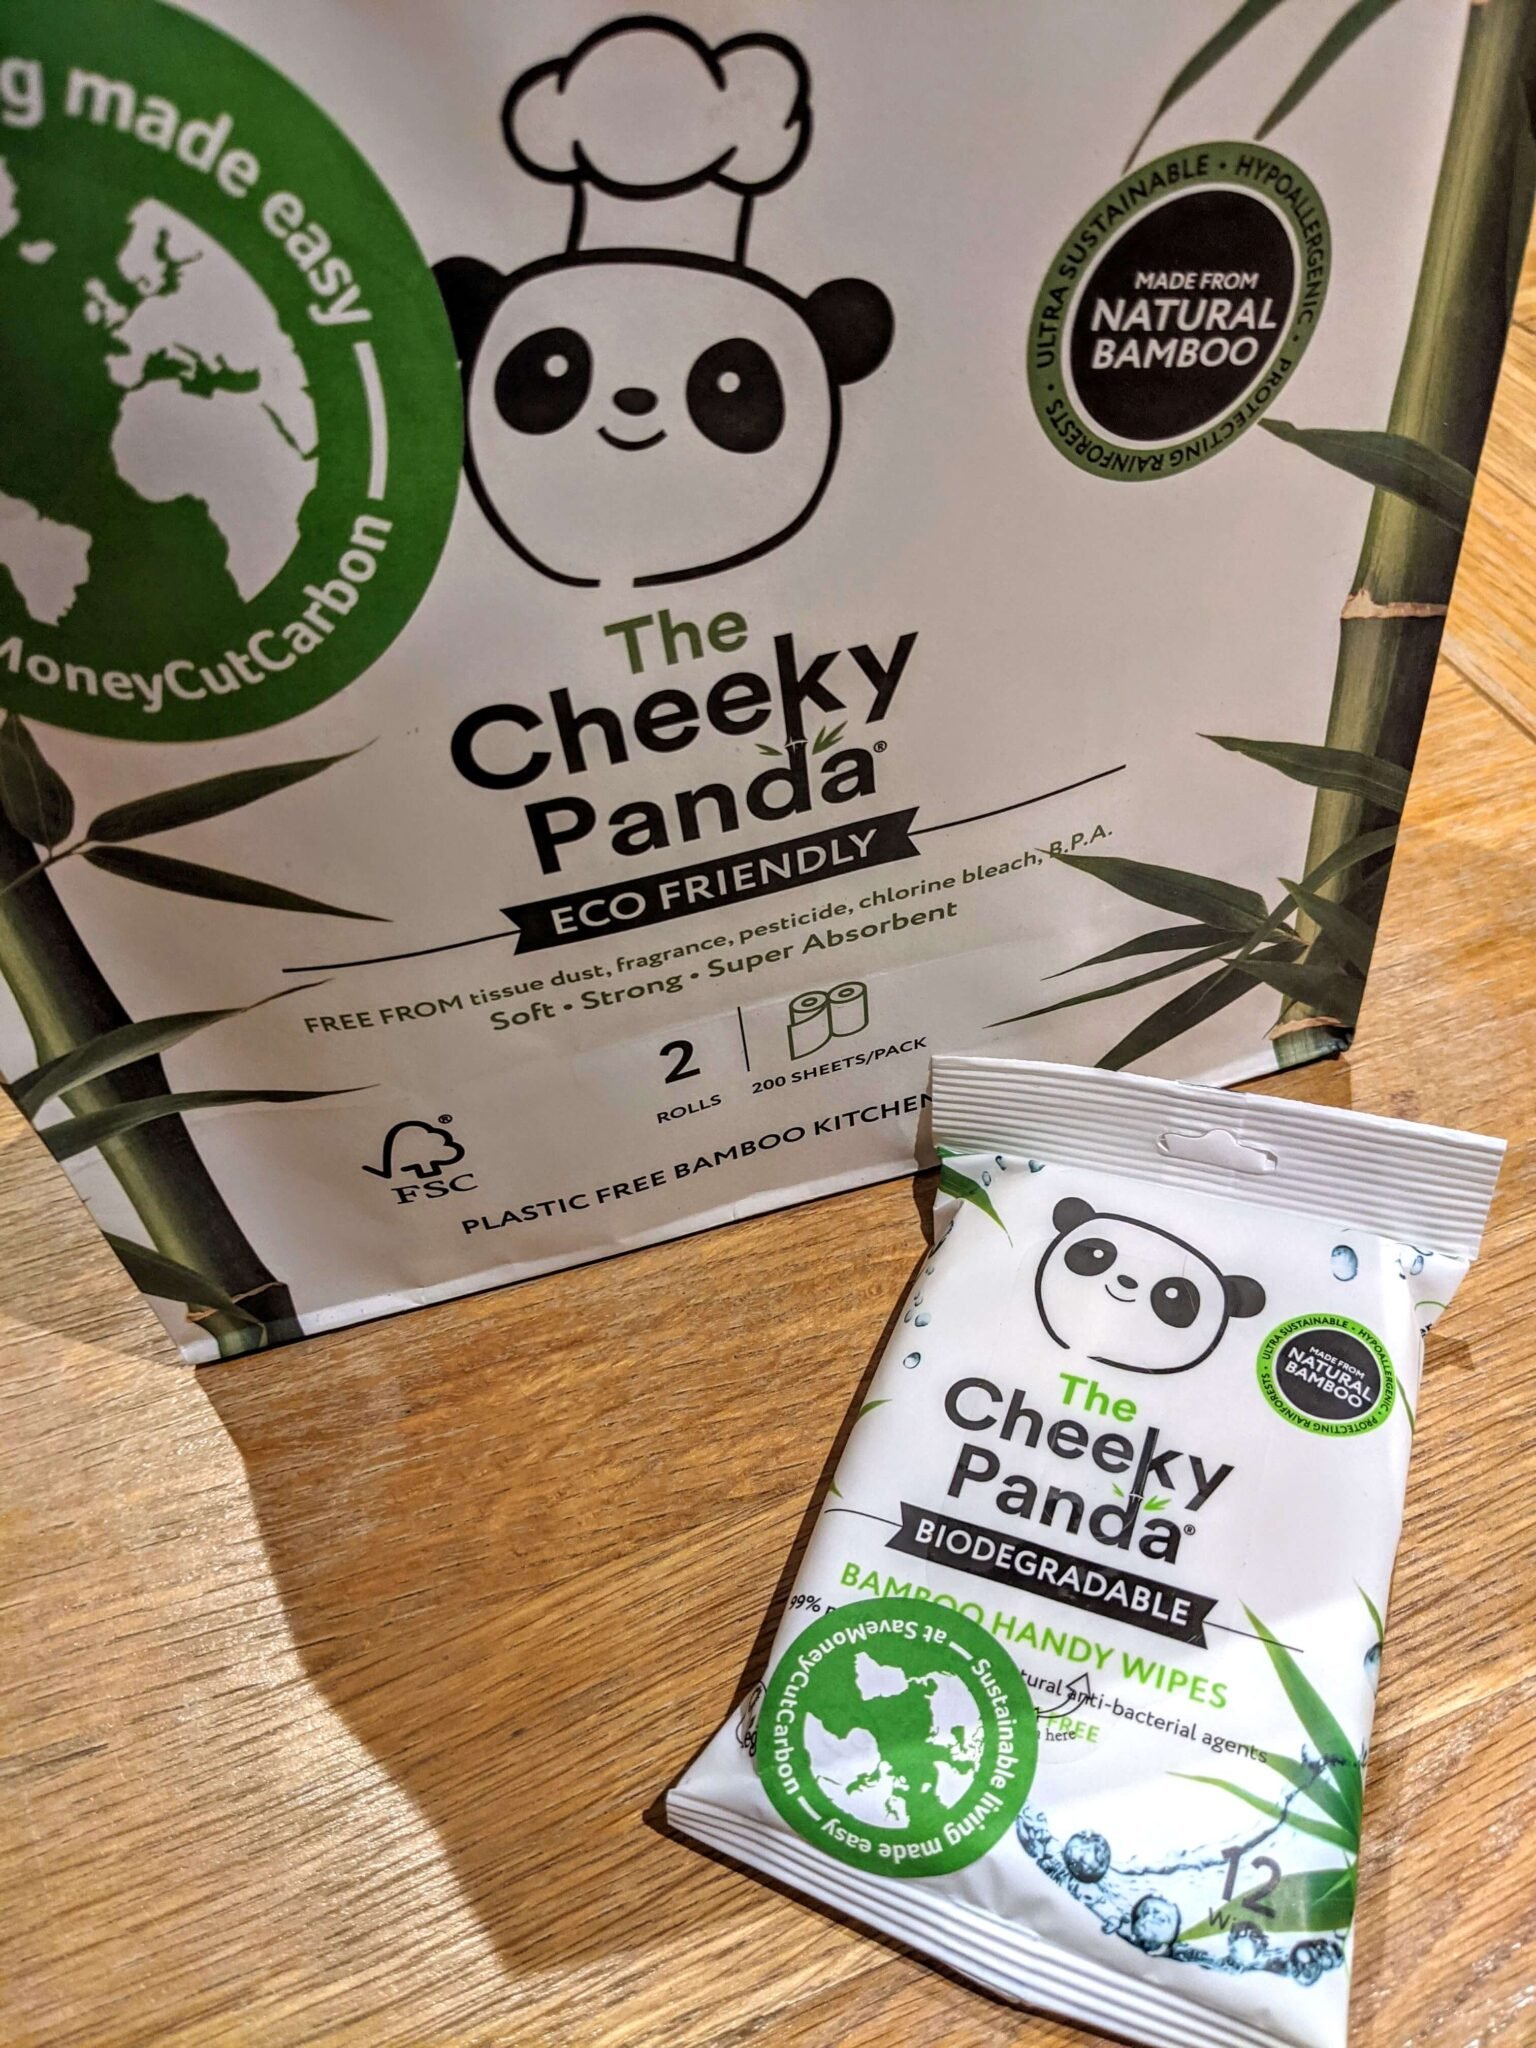 cheeky panda bamboo tissues wipes kitchen roll